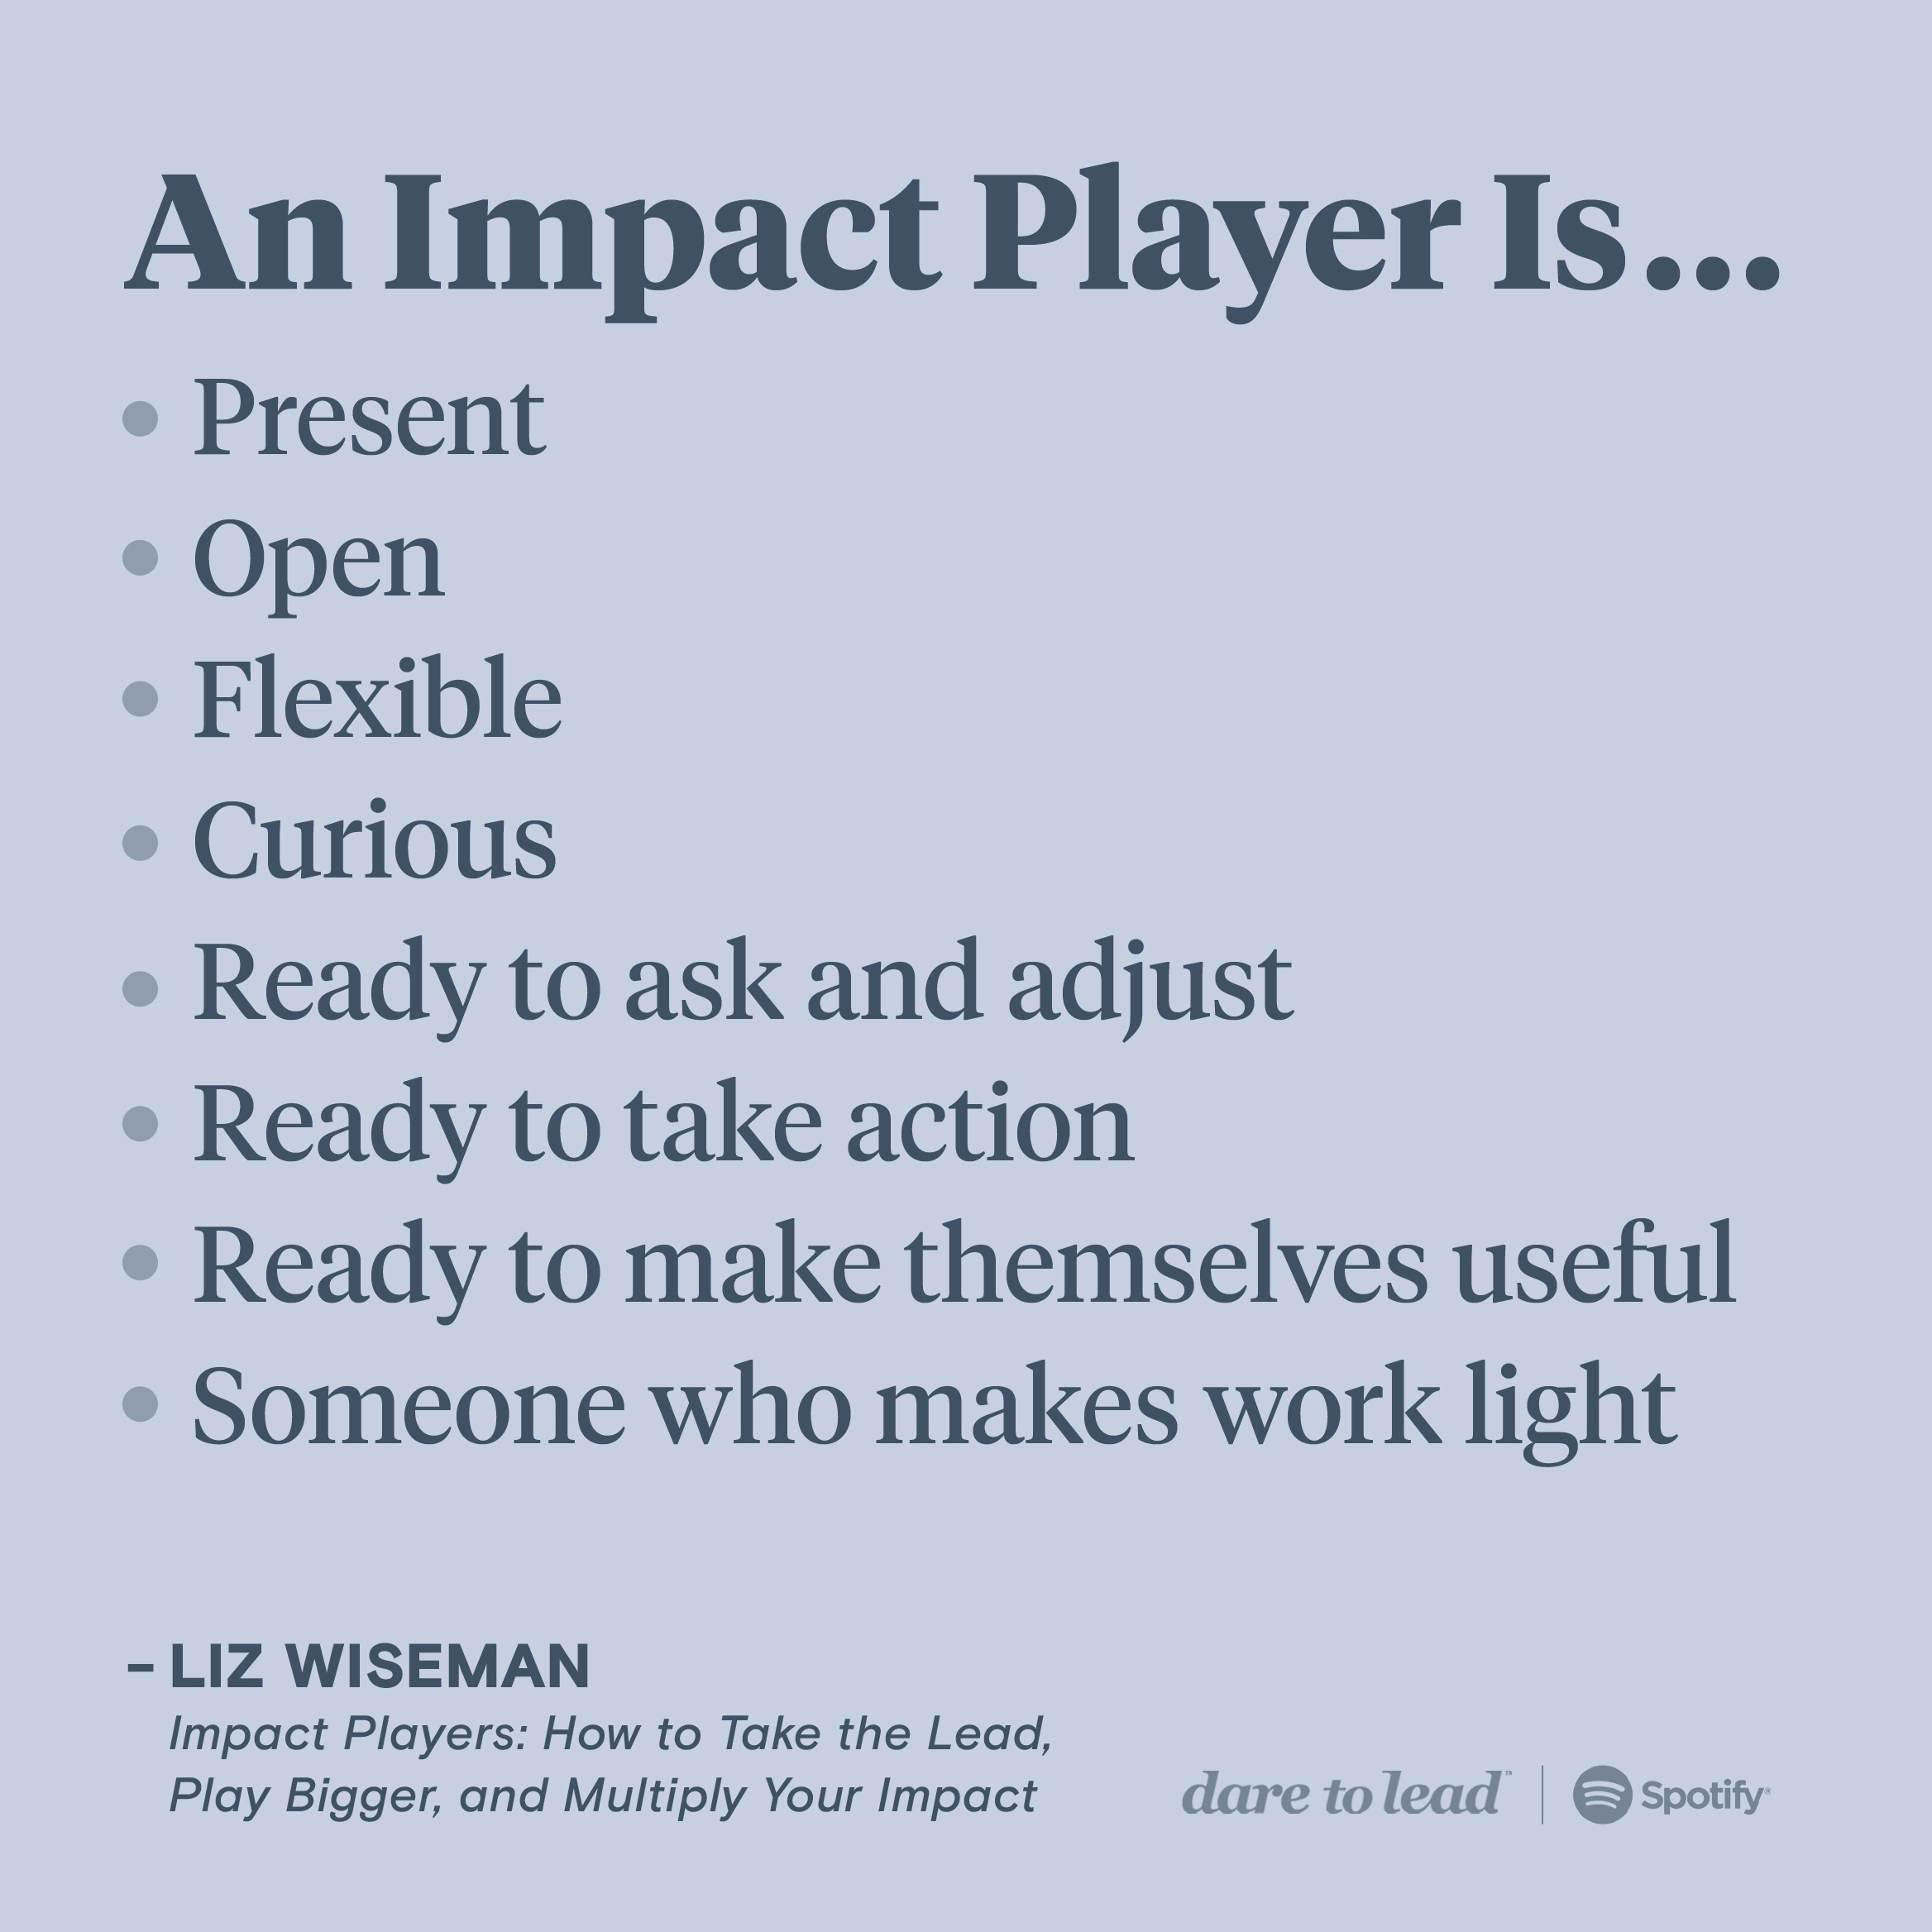 Liz Wiseman’s definition of an impact player